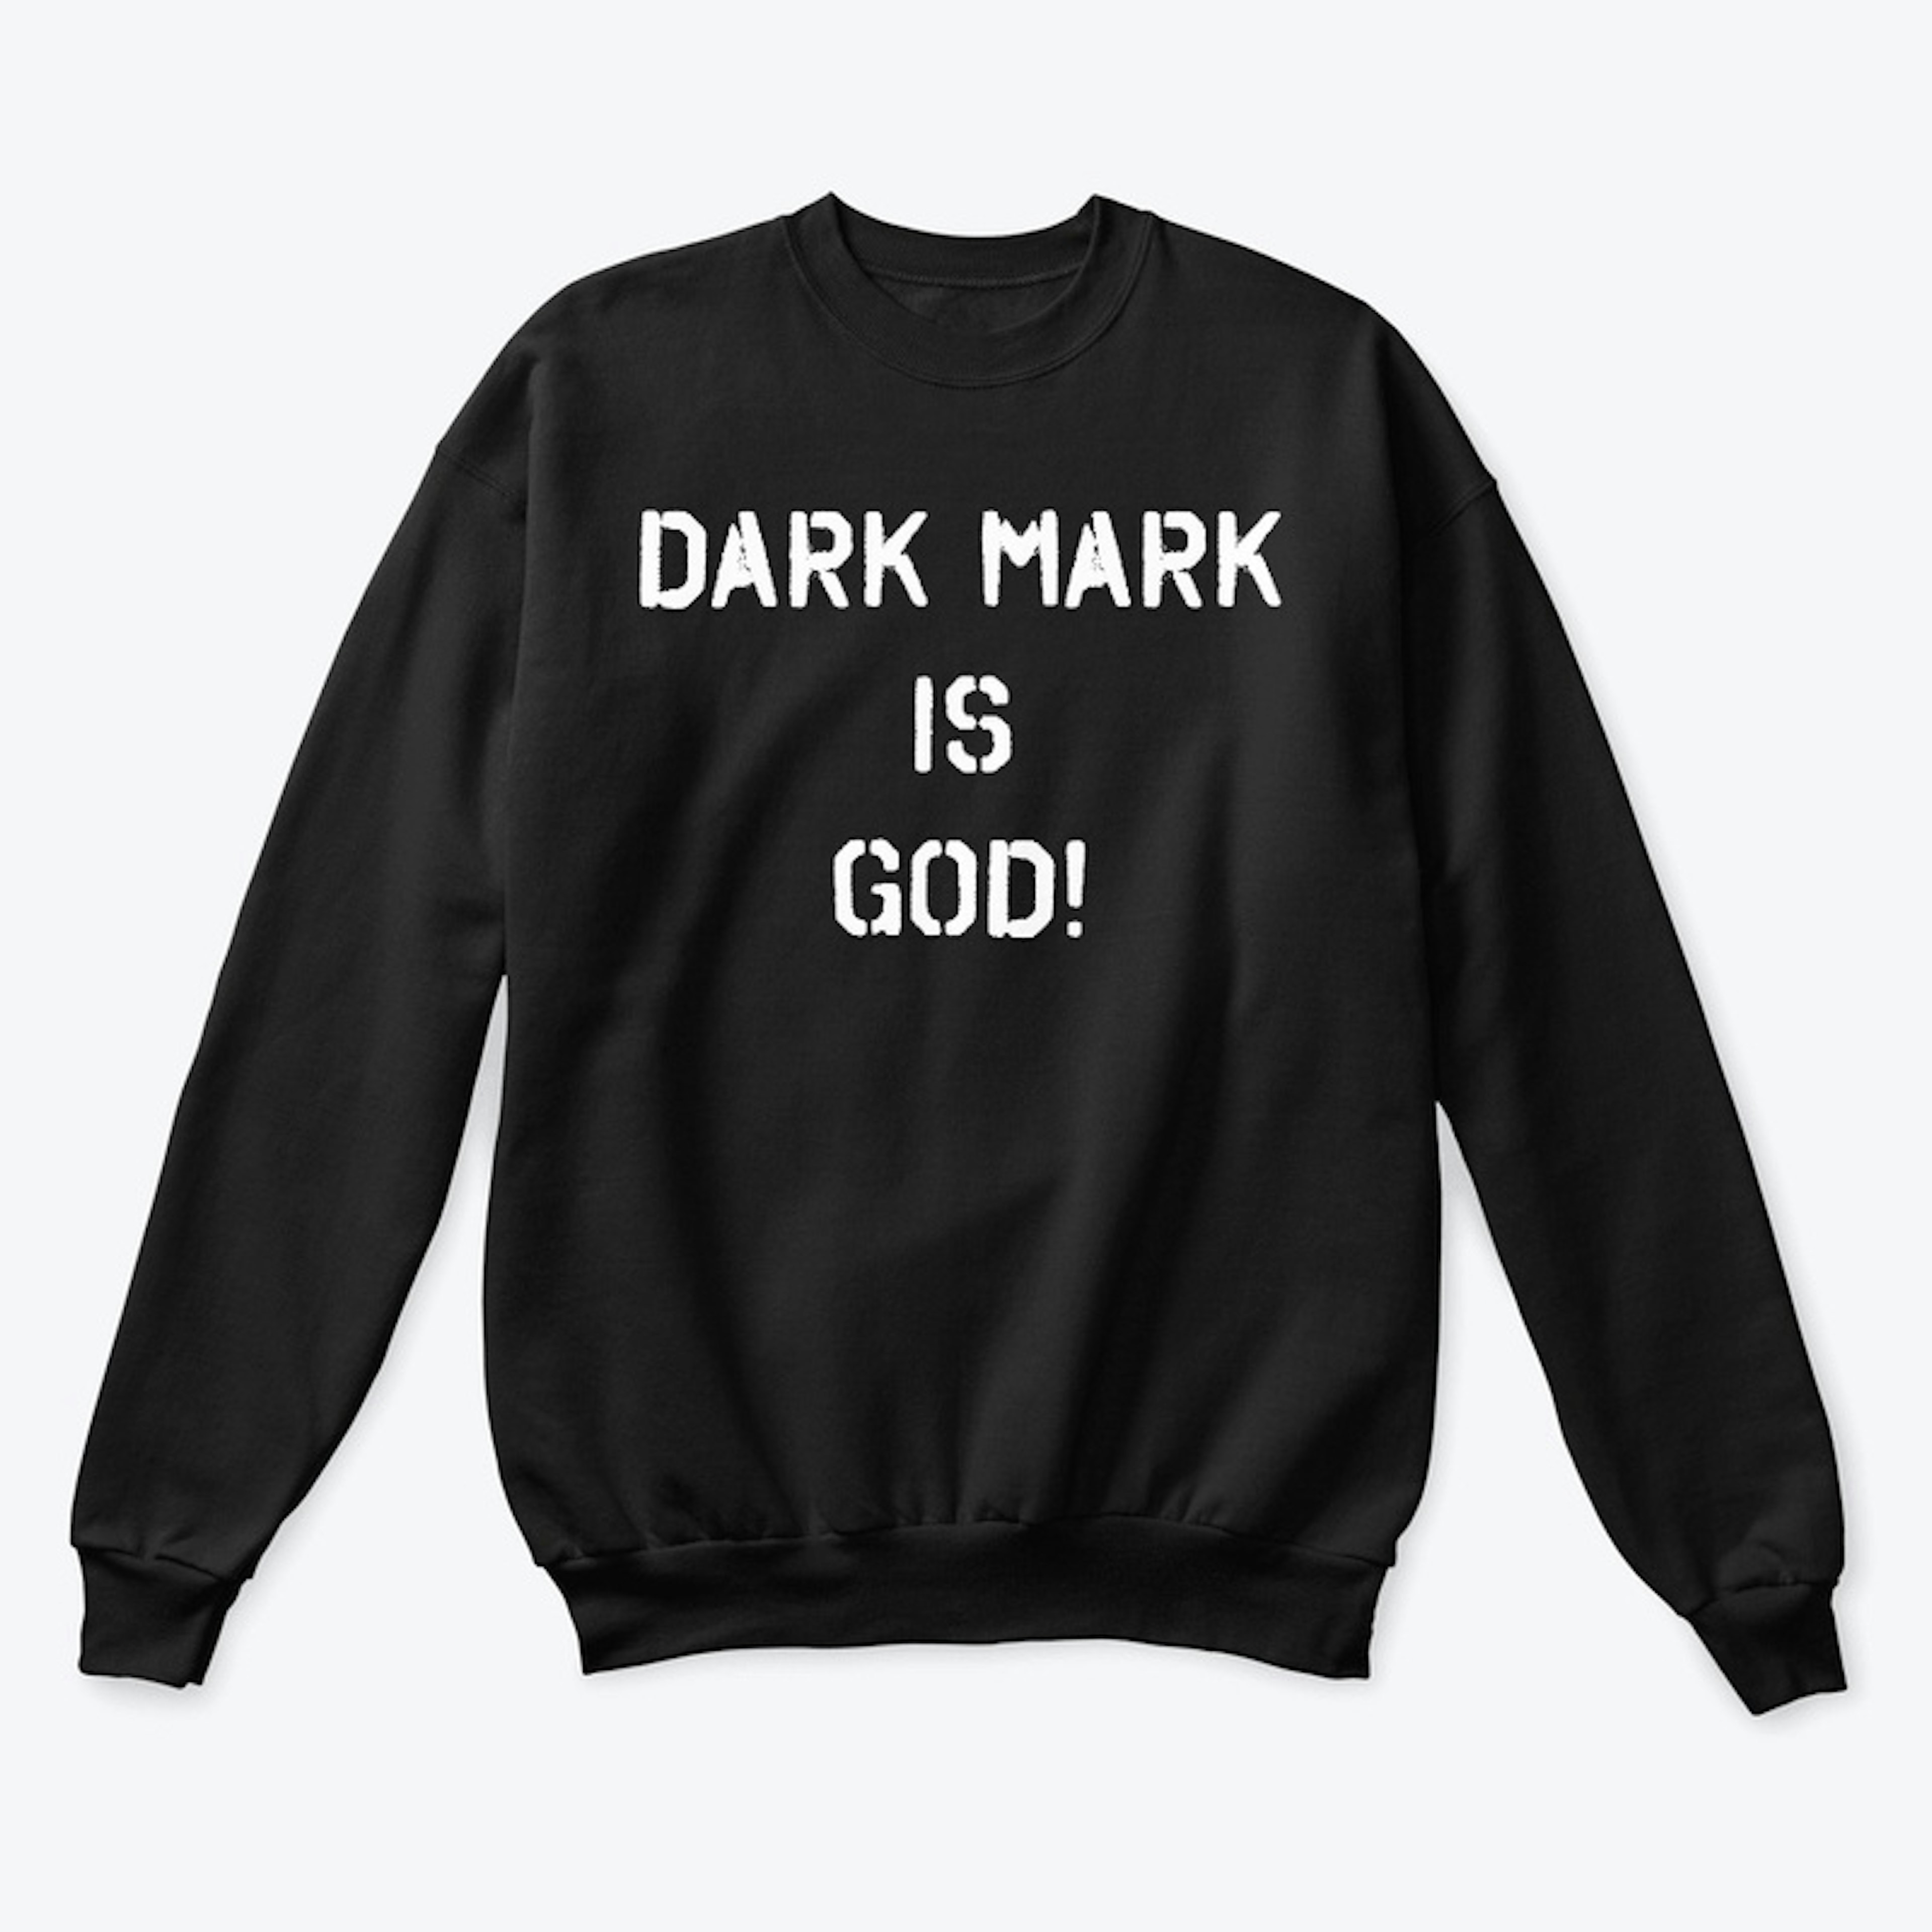 DARK MARK IS GOD!